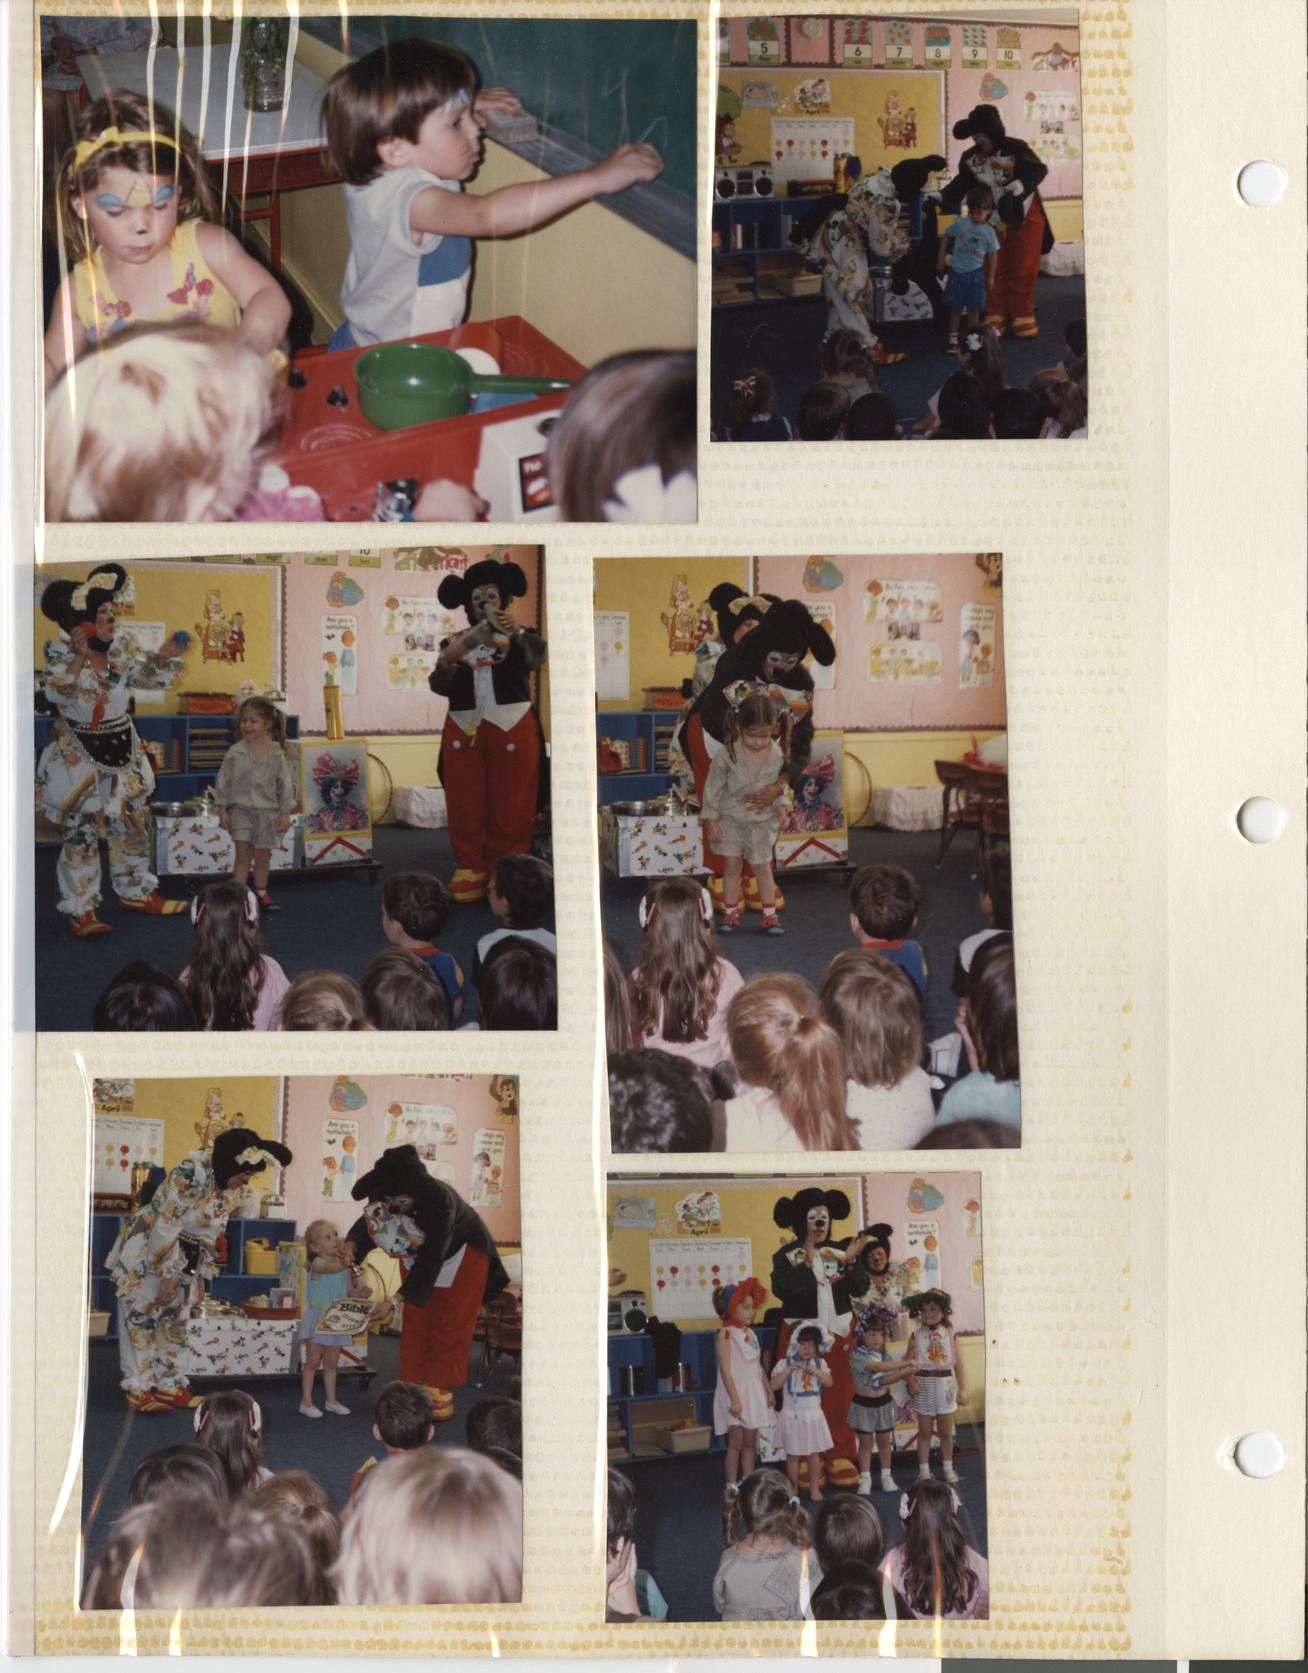 Temple Beth Sholom Preschool photo album, page 46